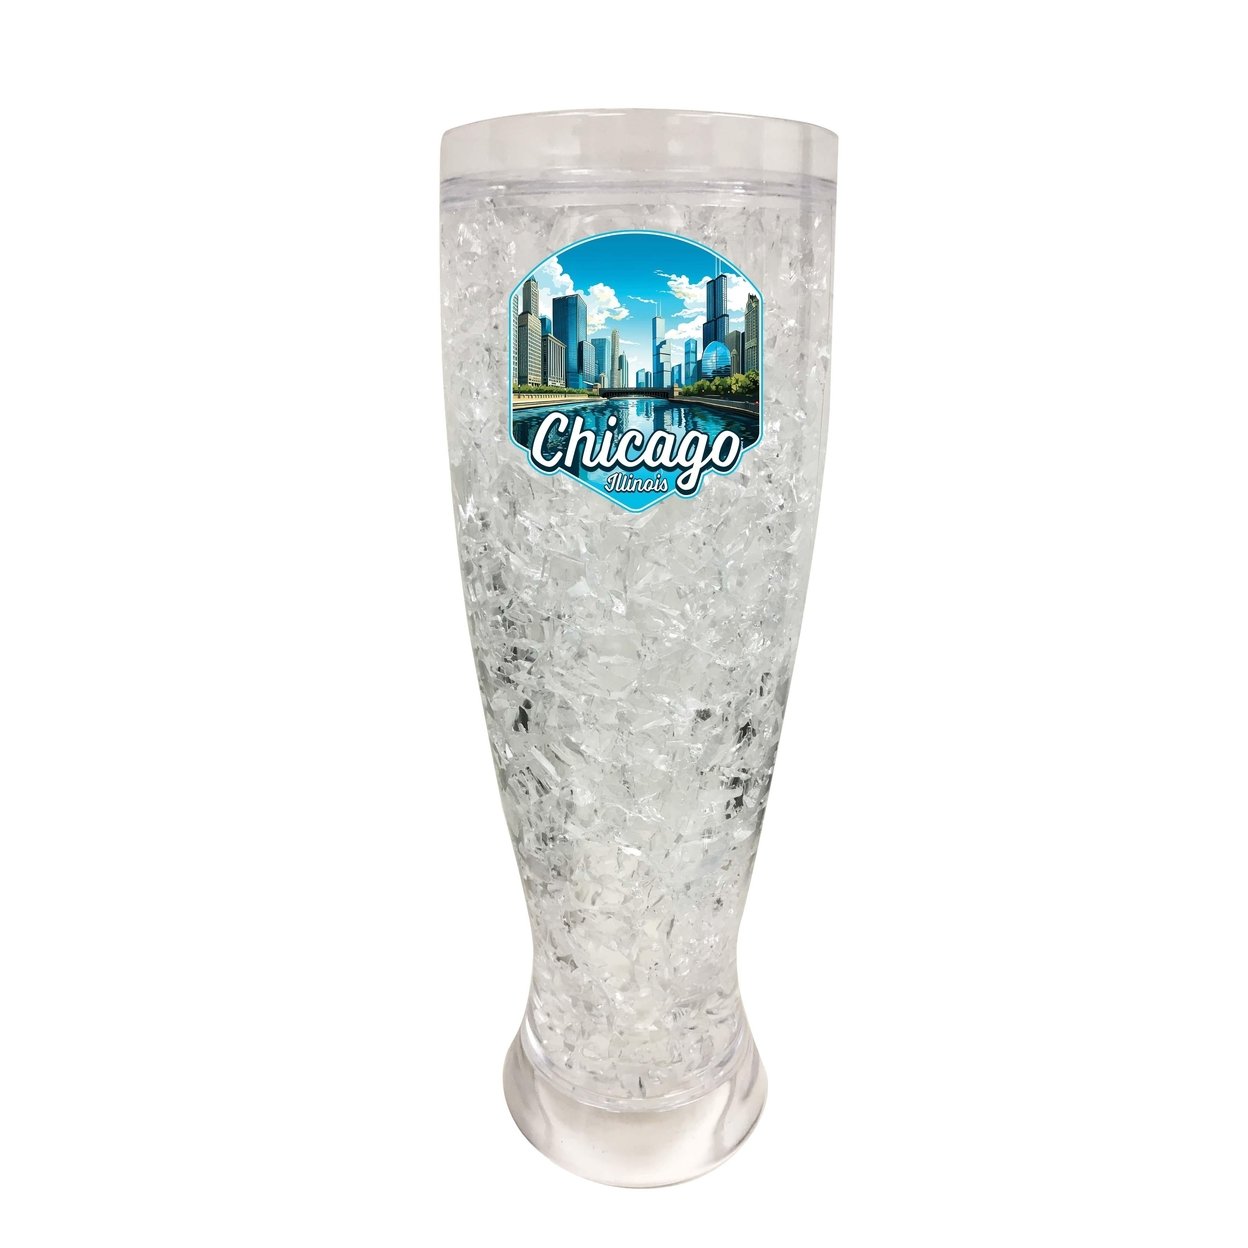 Chicago Illinois A Souvenir 16oz Broken Glass Frosty Mug - 4-Pack